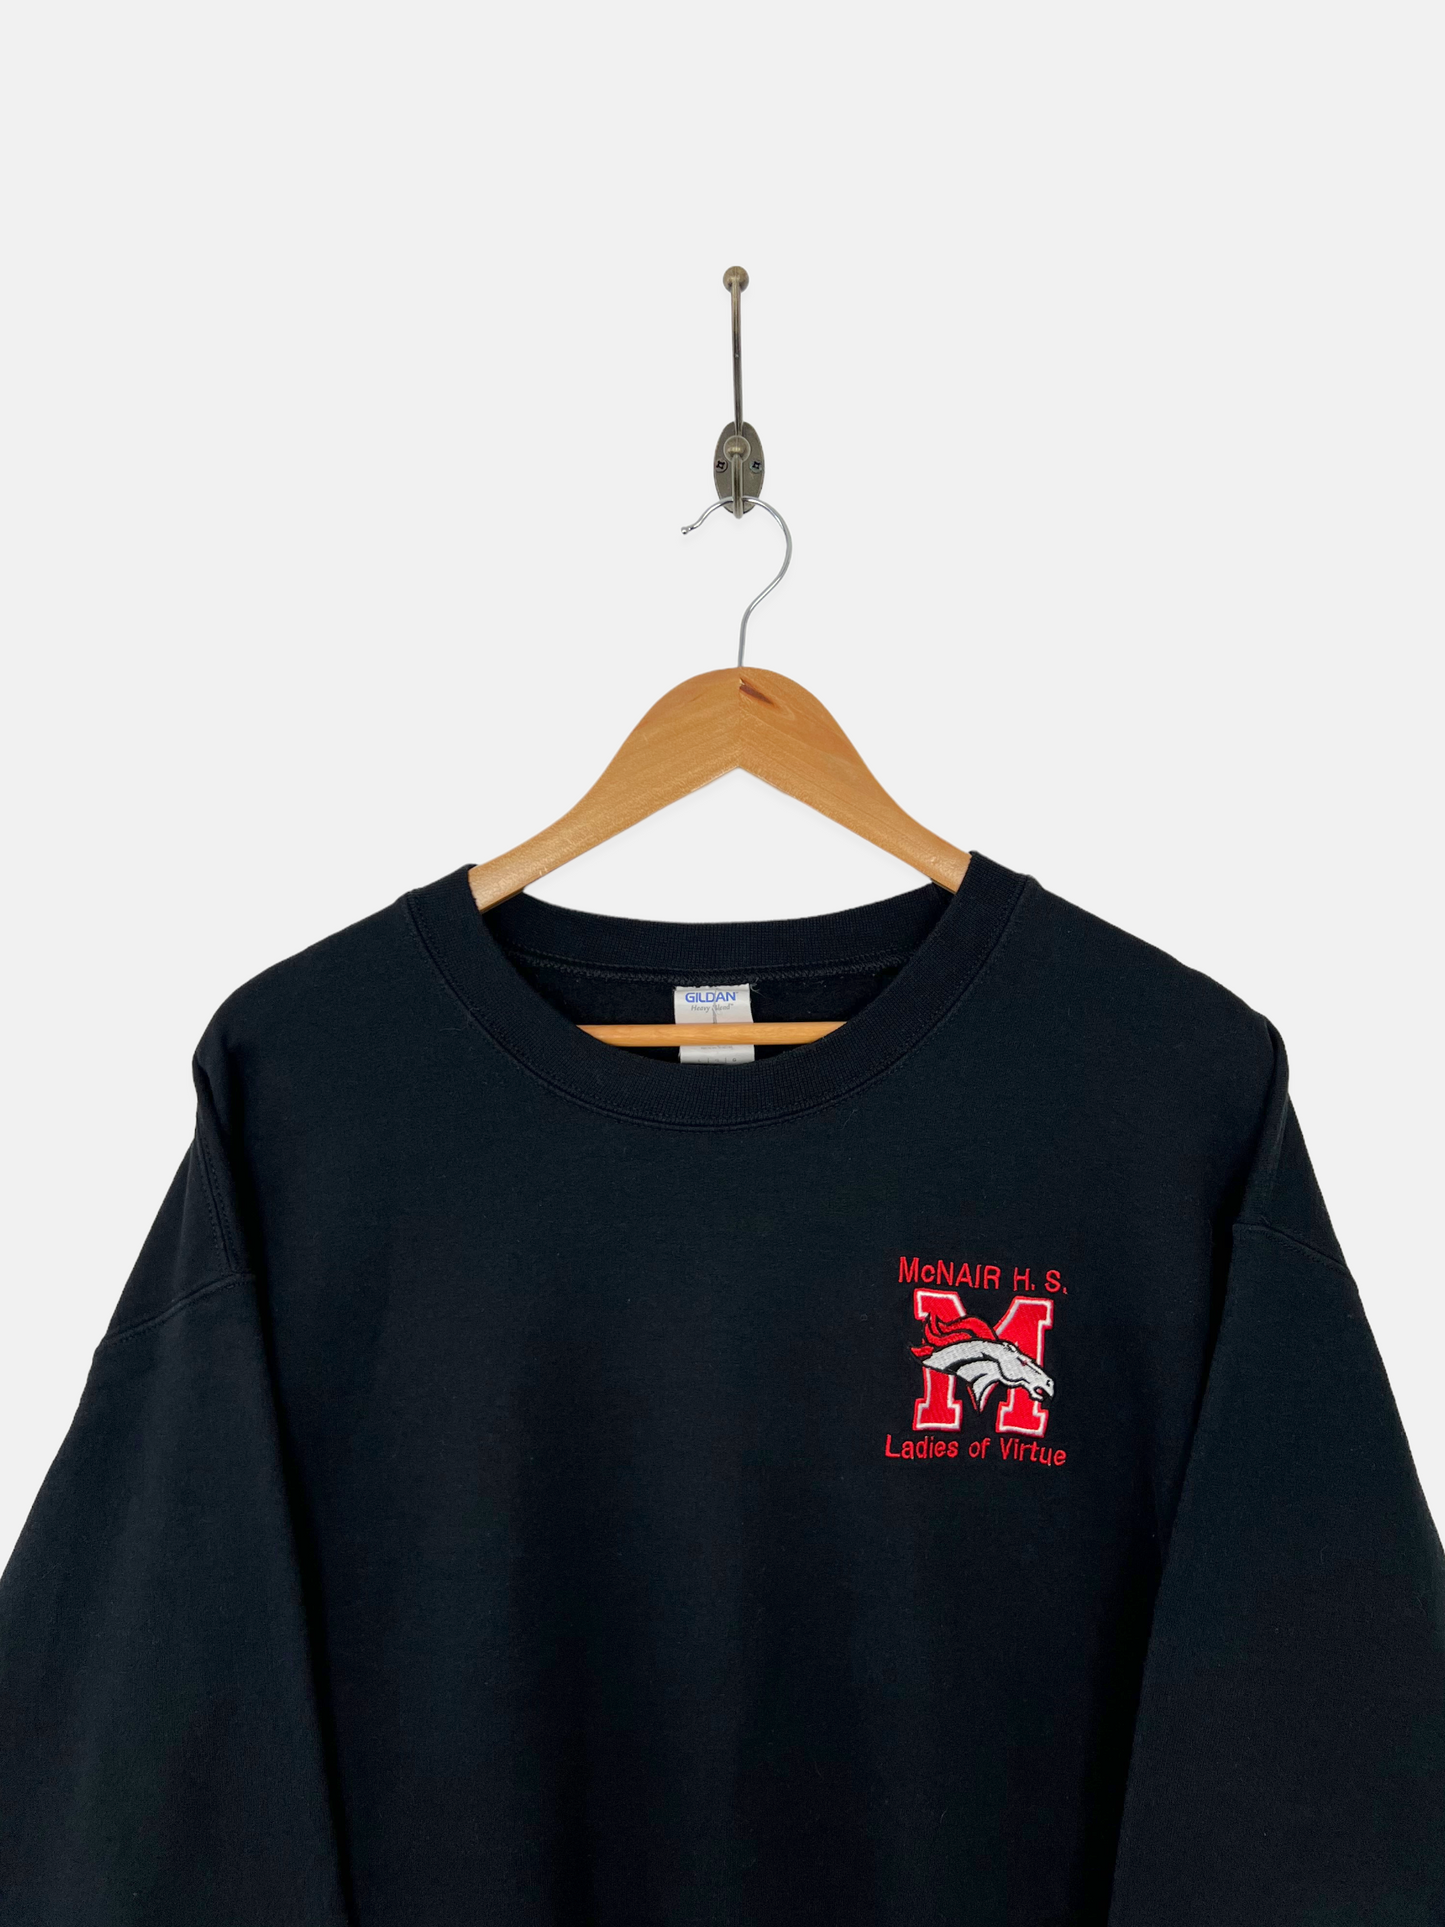 90's McNair High School Embroidered Vintage Sweatshirt Size M-L